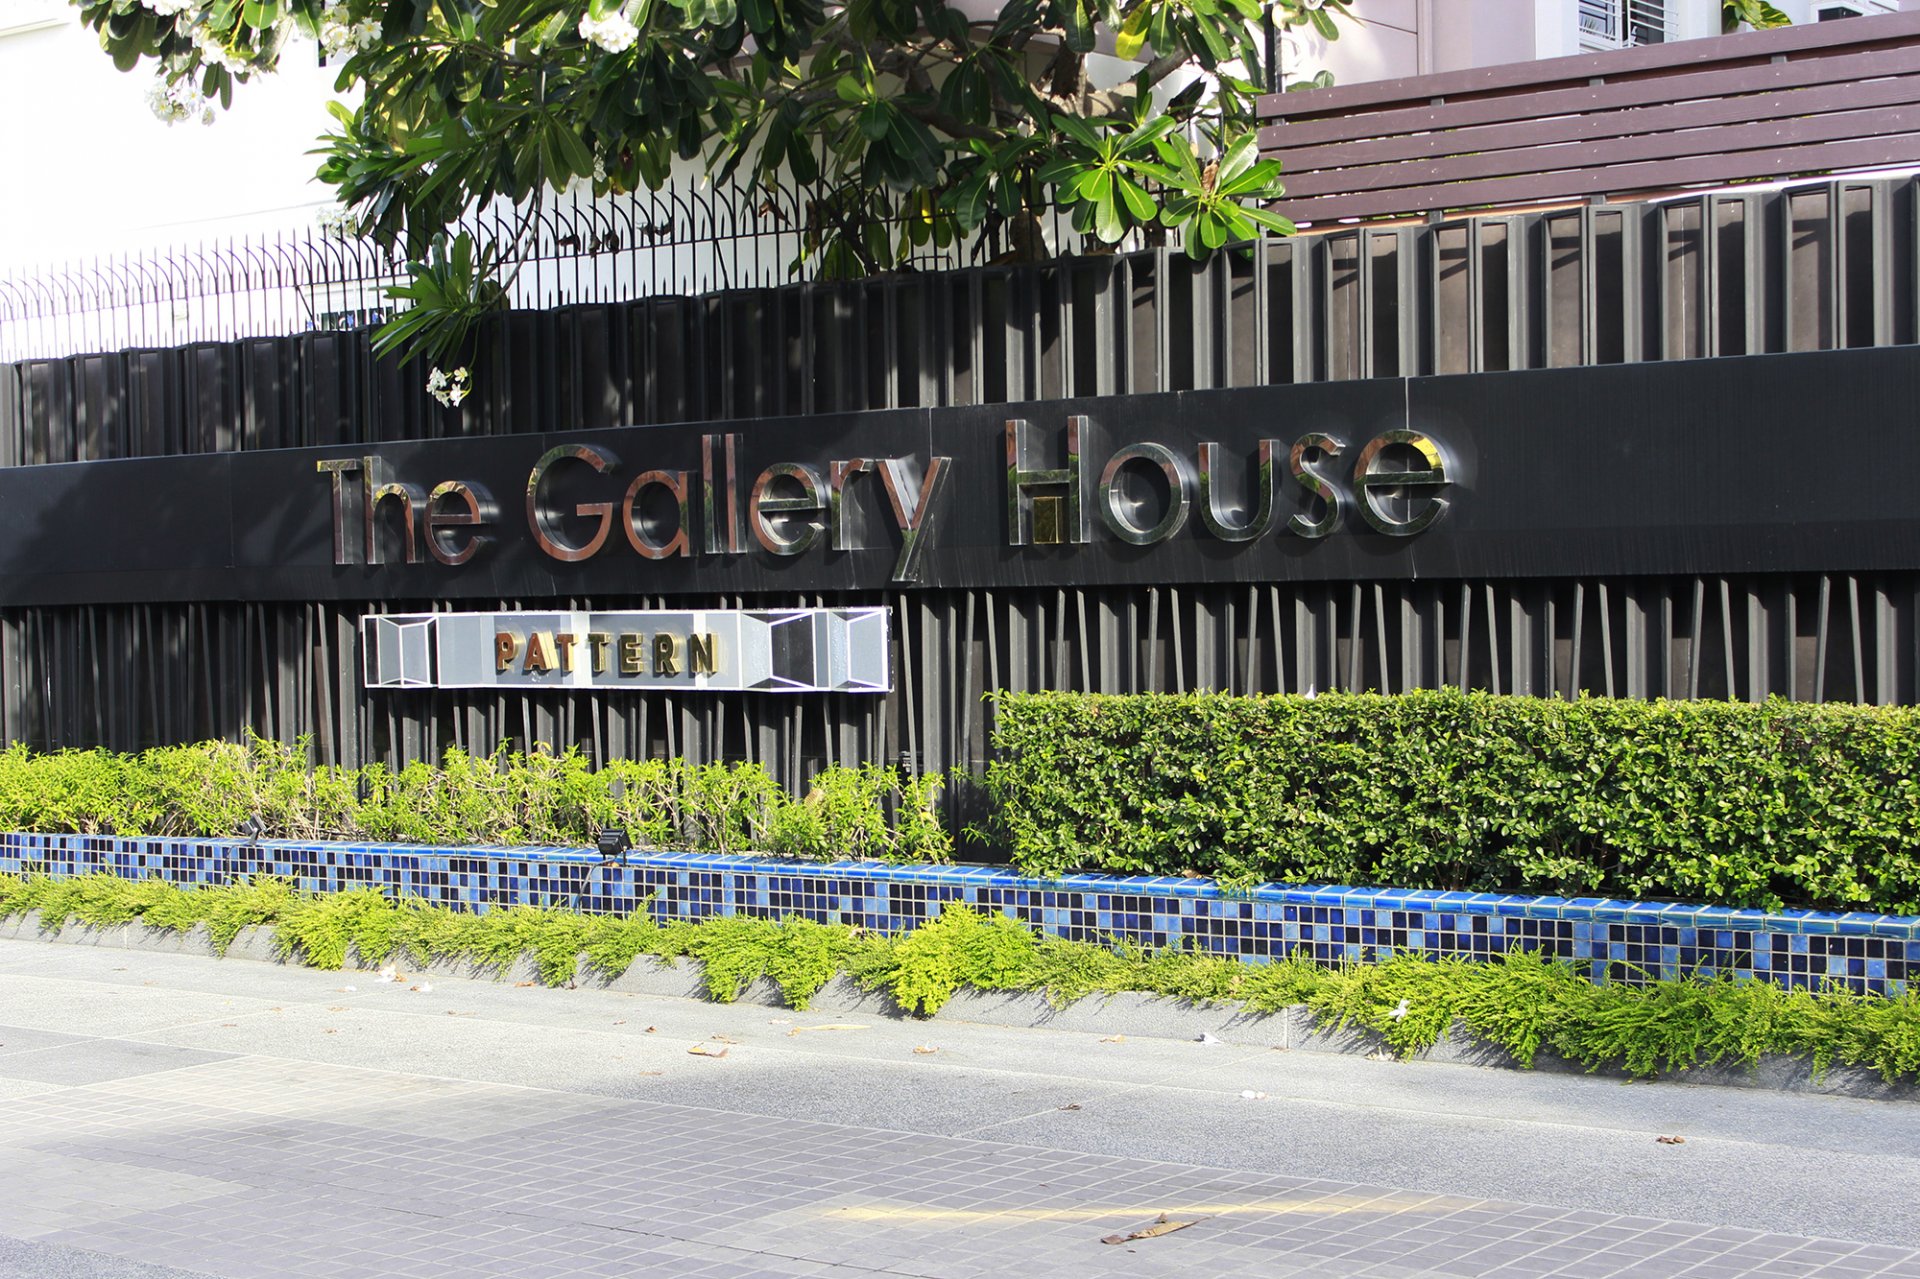 The Gallery House เป็นอีกโครงการที่ติดตั้งระบบ Smart Home โดย PZent